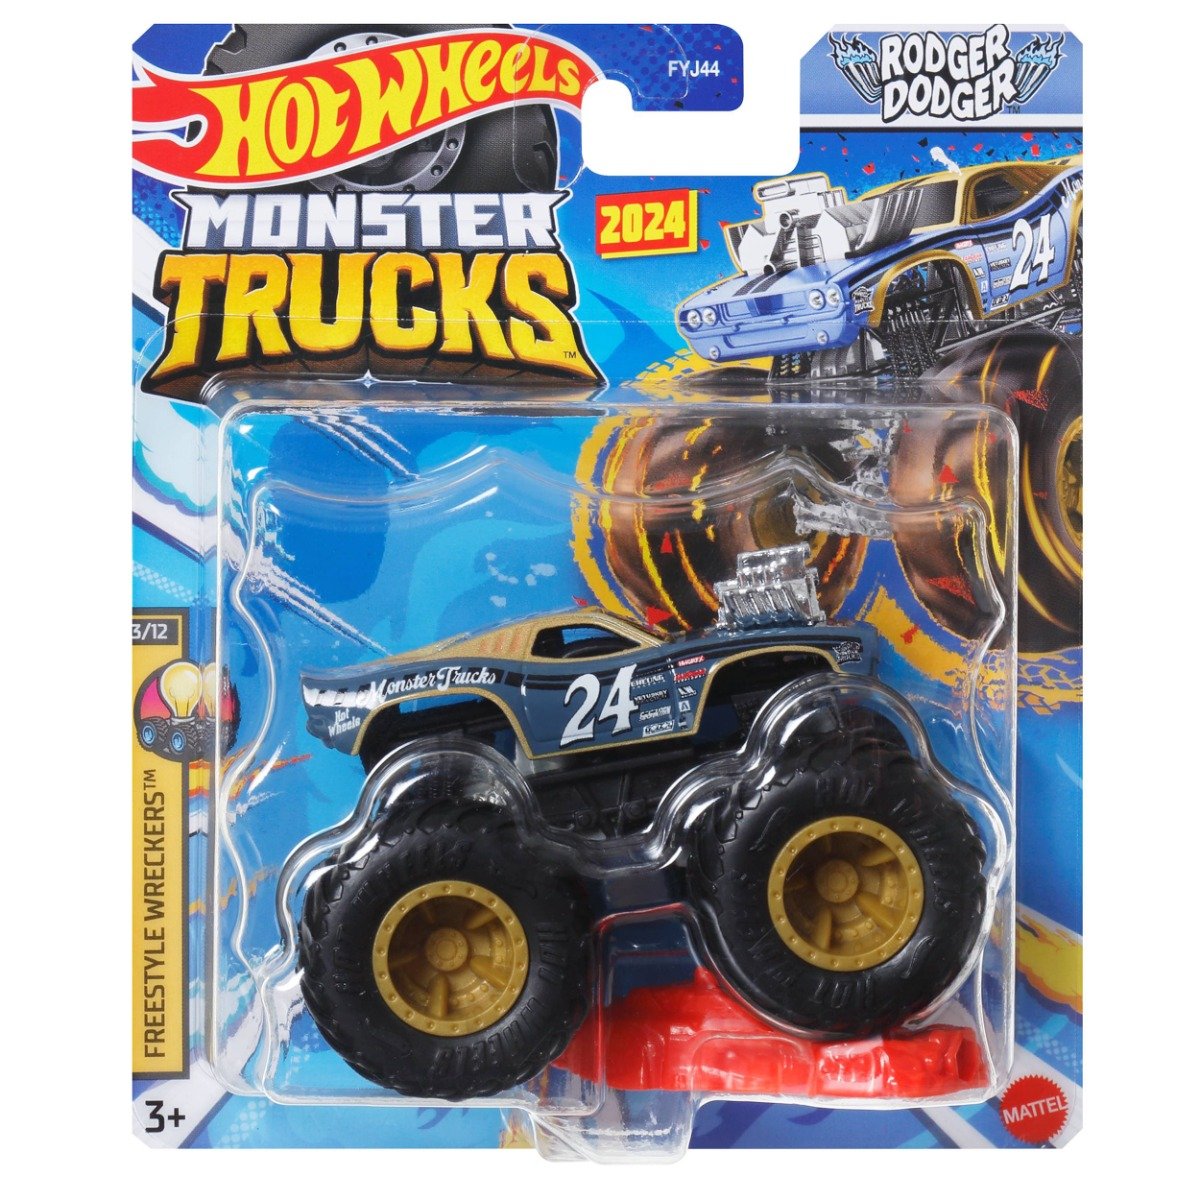 Masinuta Hot Wheels Monster Truck, Rodger Dodger, HTM59